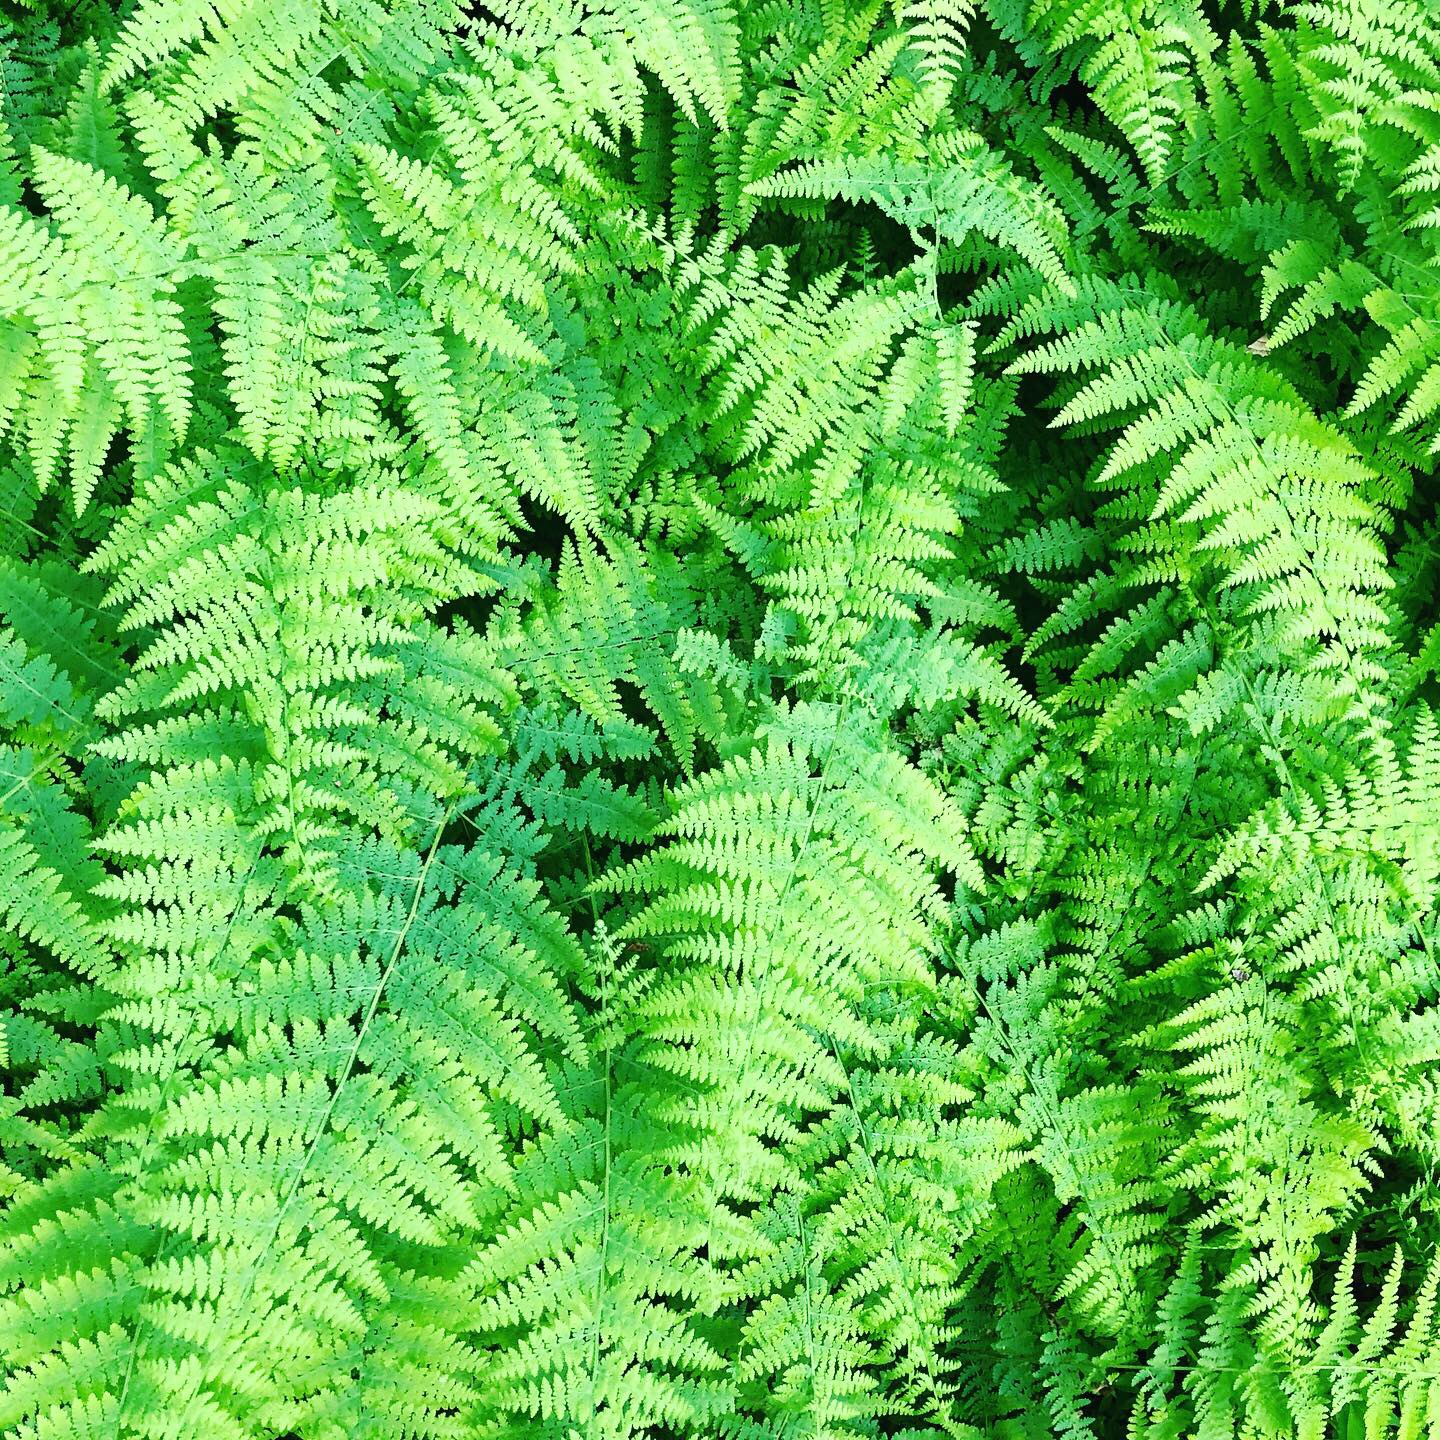 A close-up photo of ferns.